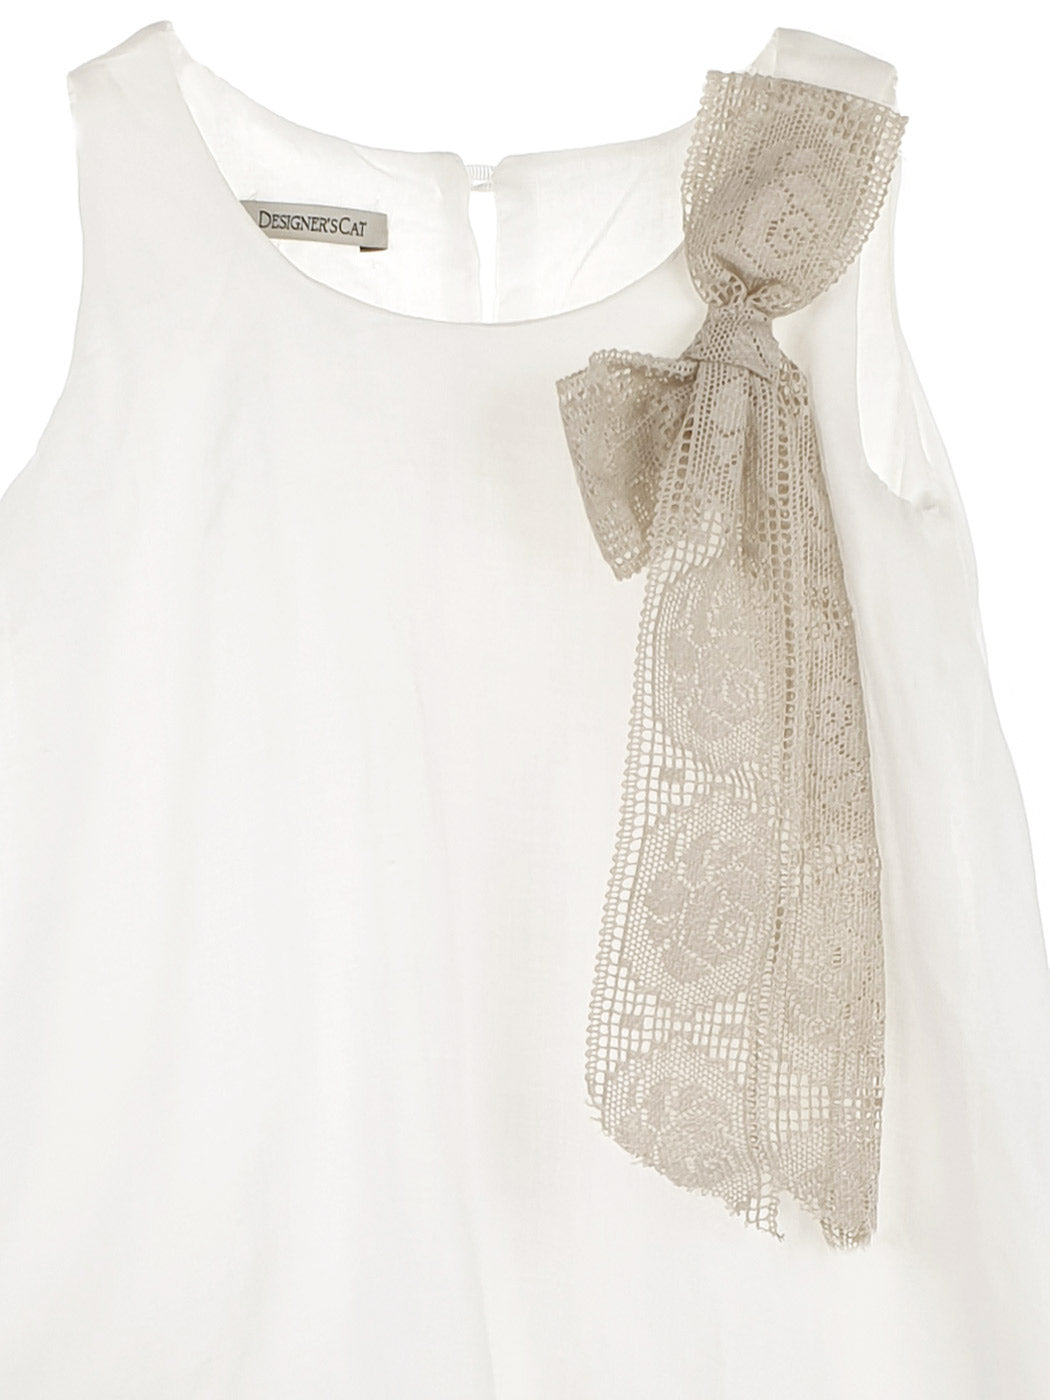 Baby Girl's Dress with crochet flowers - SARRAH - white